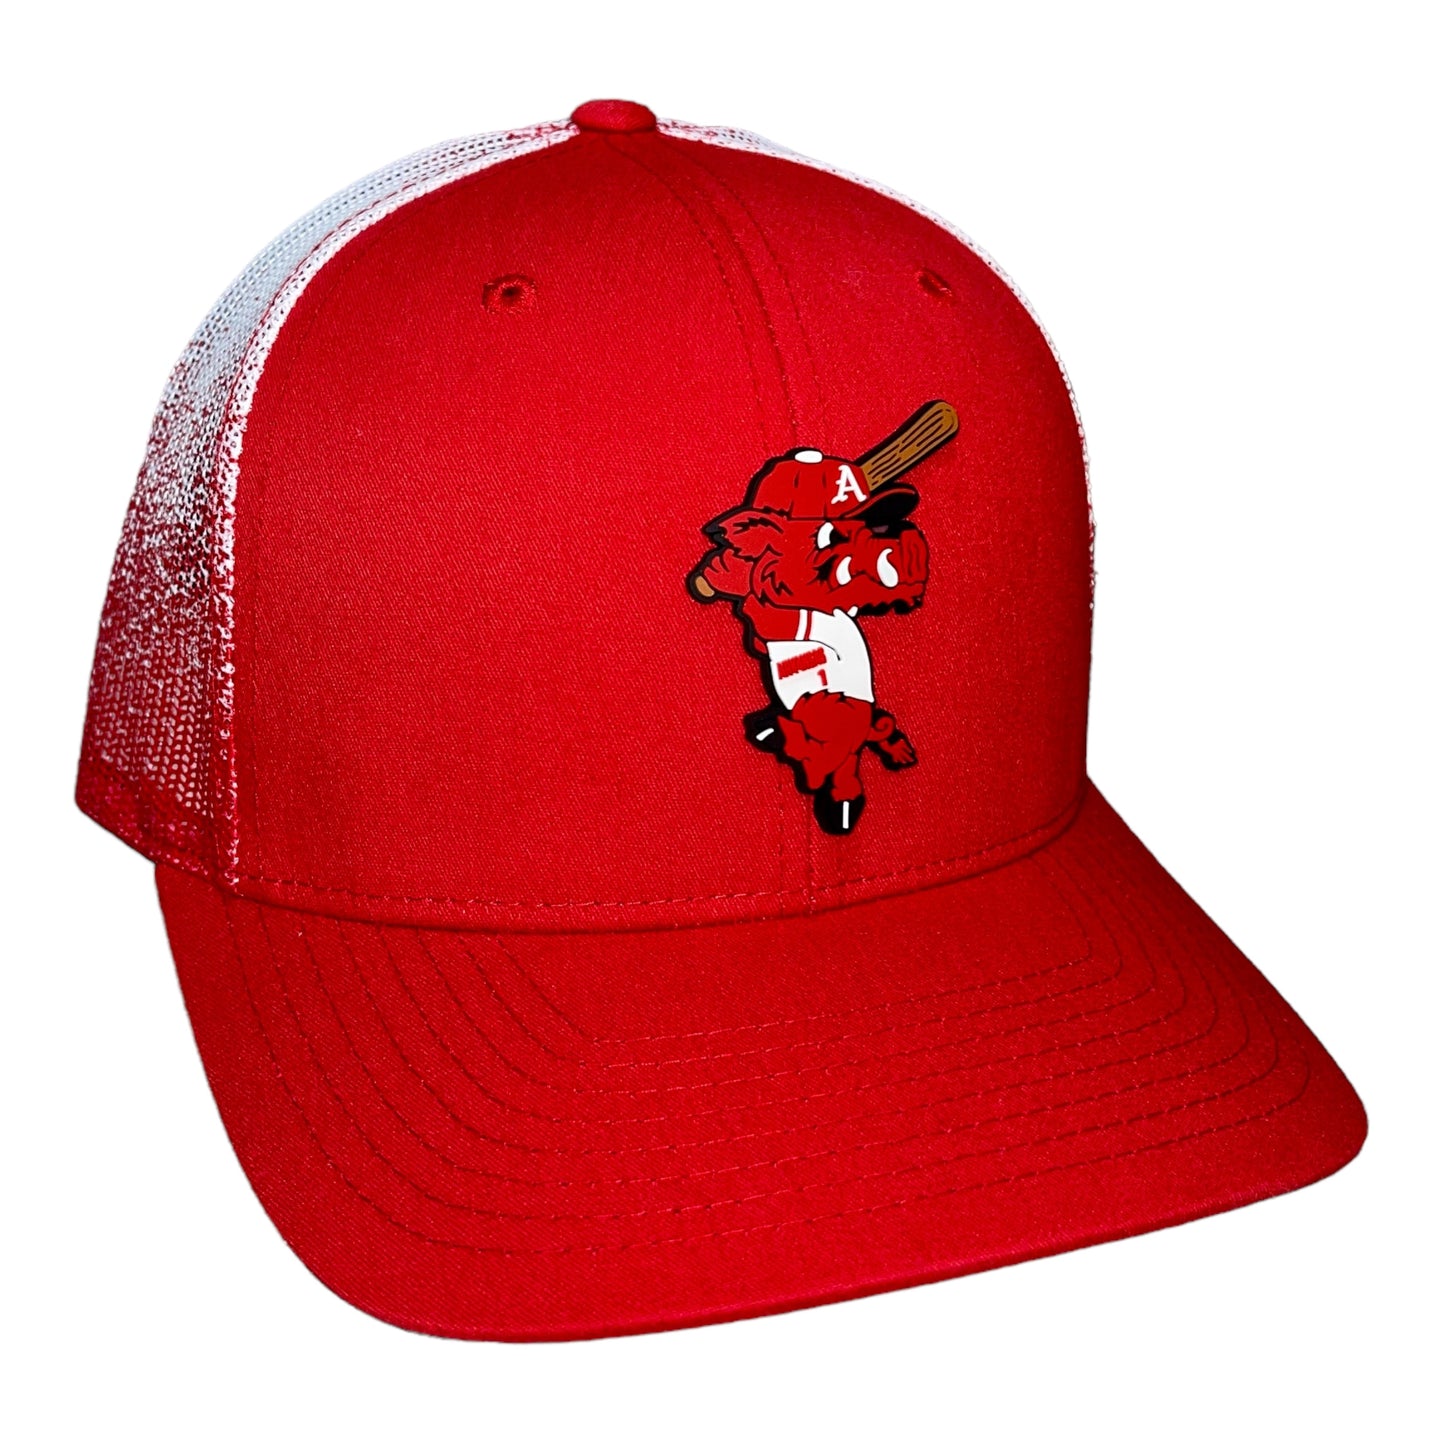 Arkansas Razorbacks Baseball Ribby at Bat 3D Snapback Trucker Hat- Red/ Red to White Fade